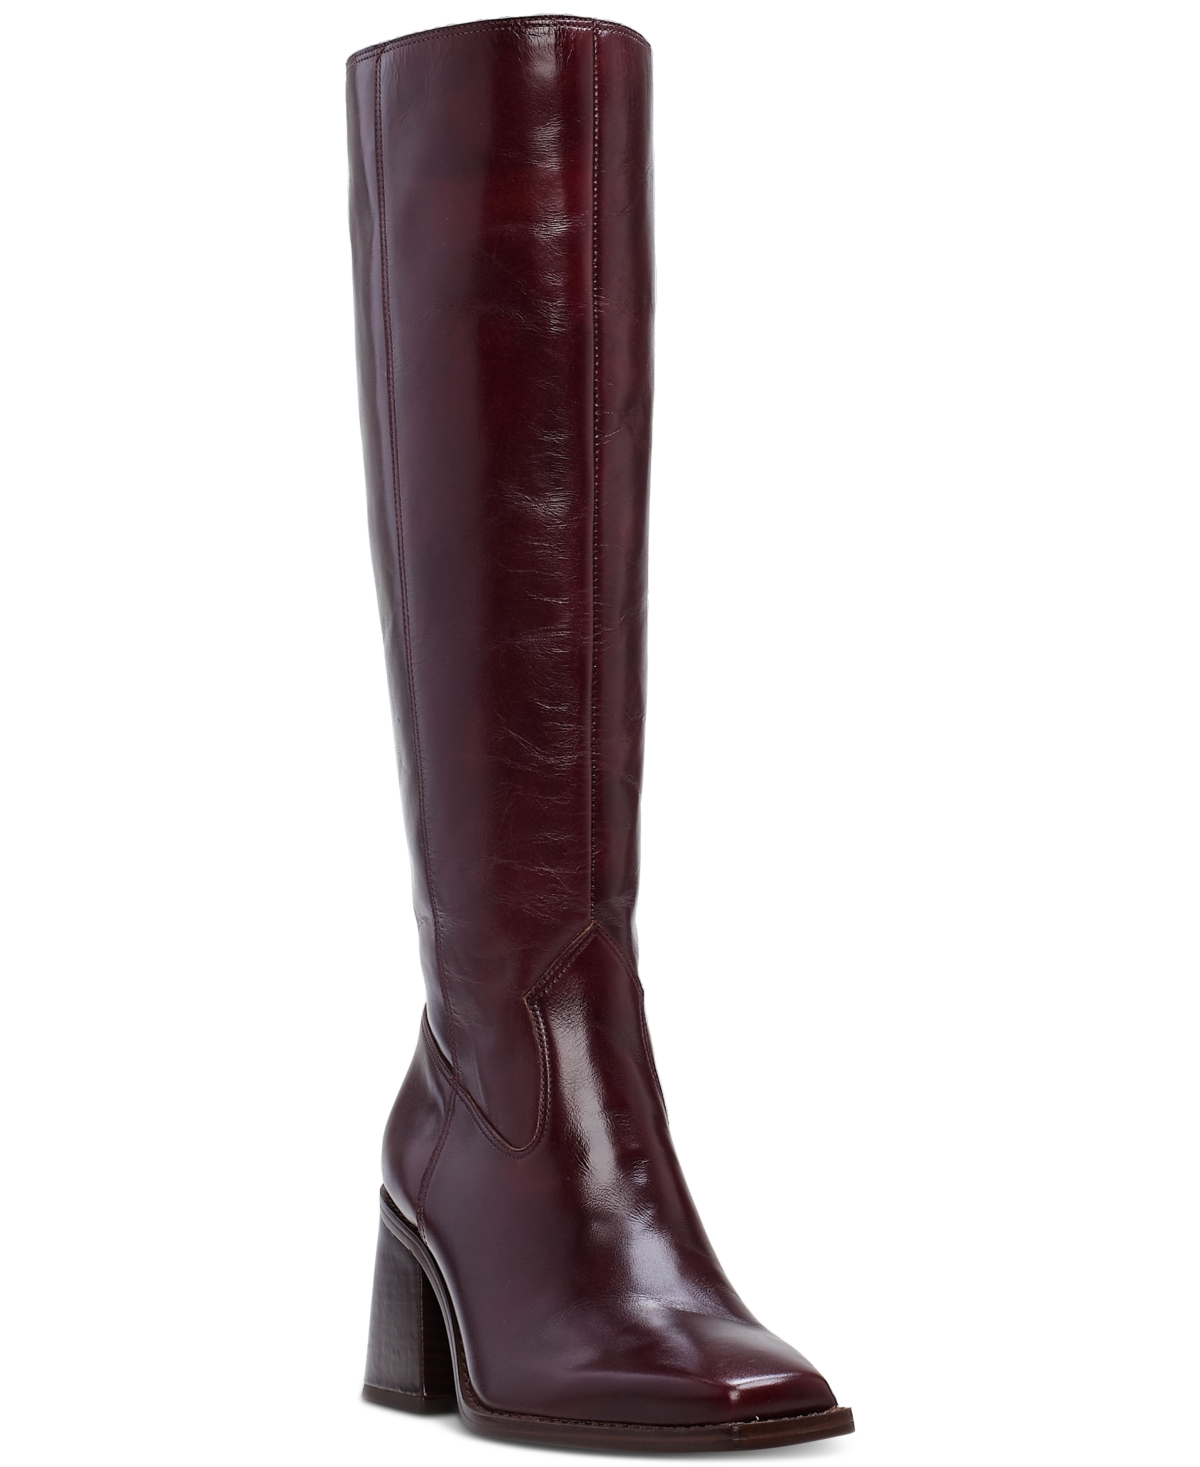 Sangeti Snip-Toe Block-Heel Wide-Calf Tall Boots - Golden Walnut Leather